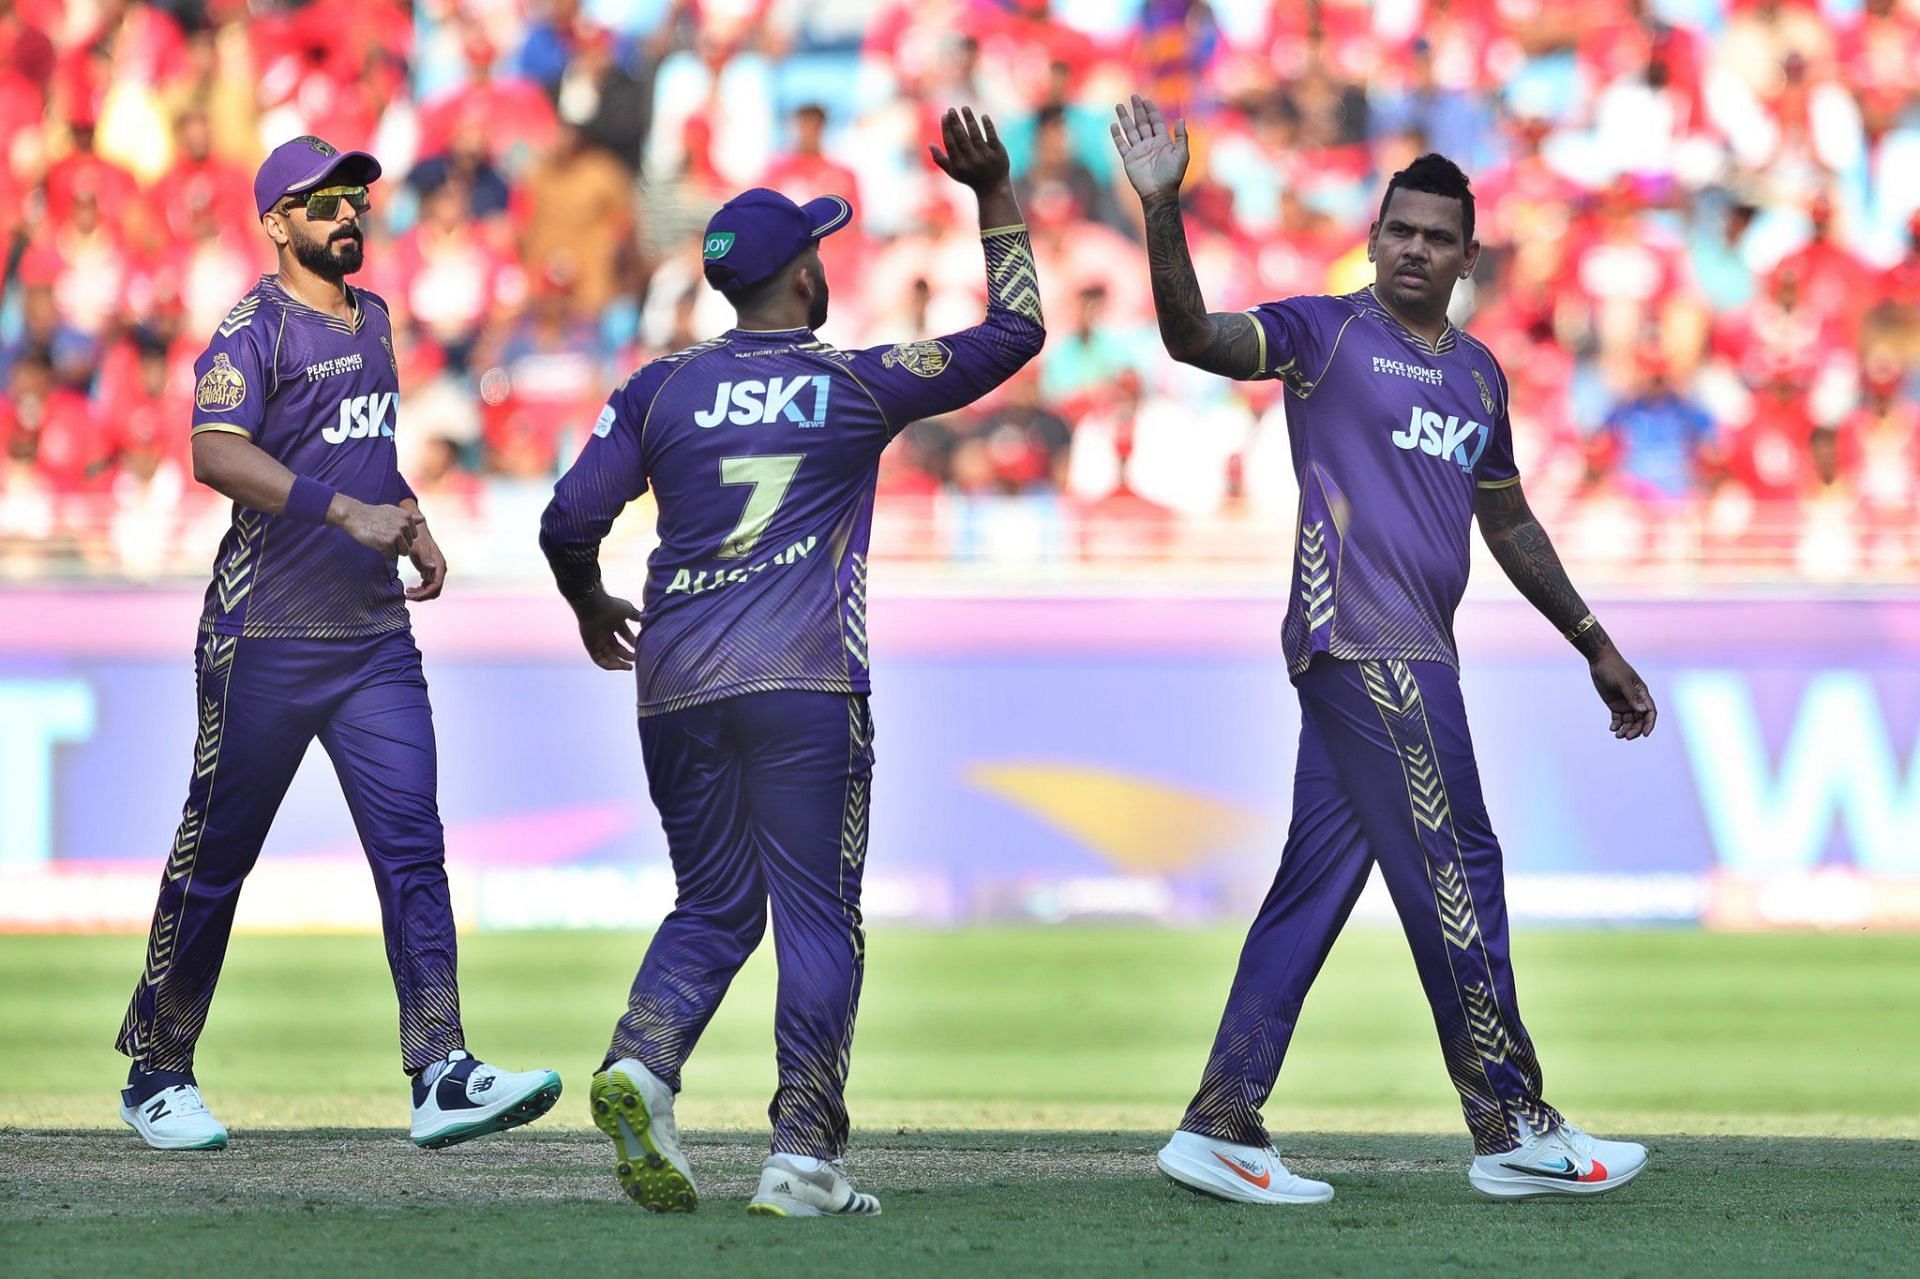 Sunil Narine celebrating a wicket. (Image Courtesy: X/International League T20)